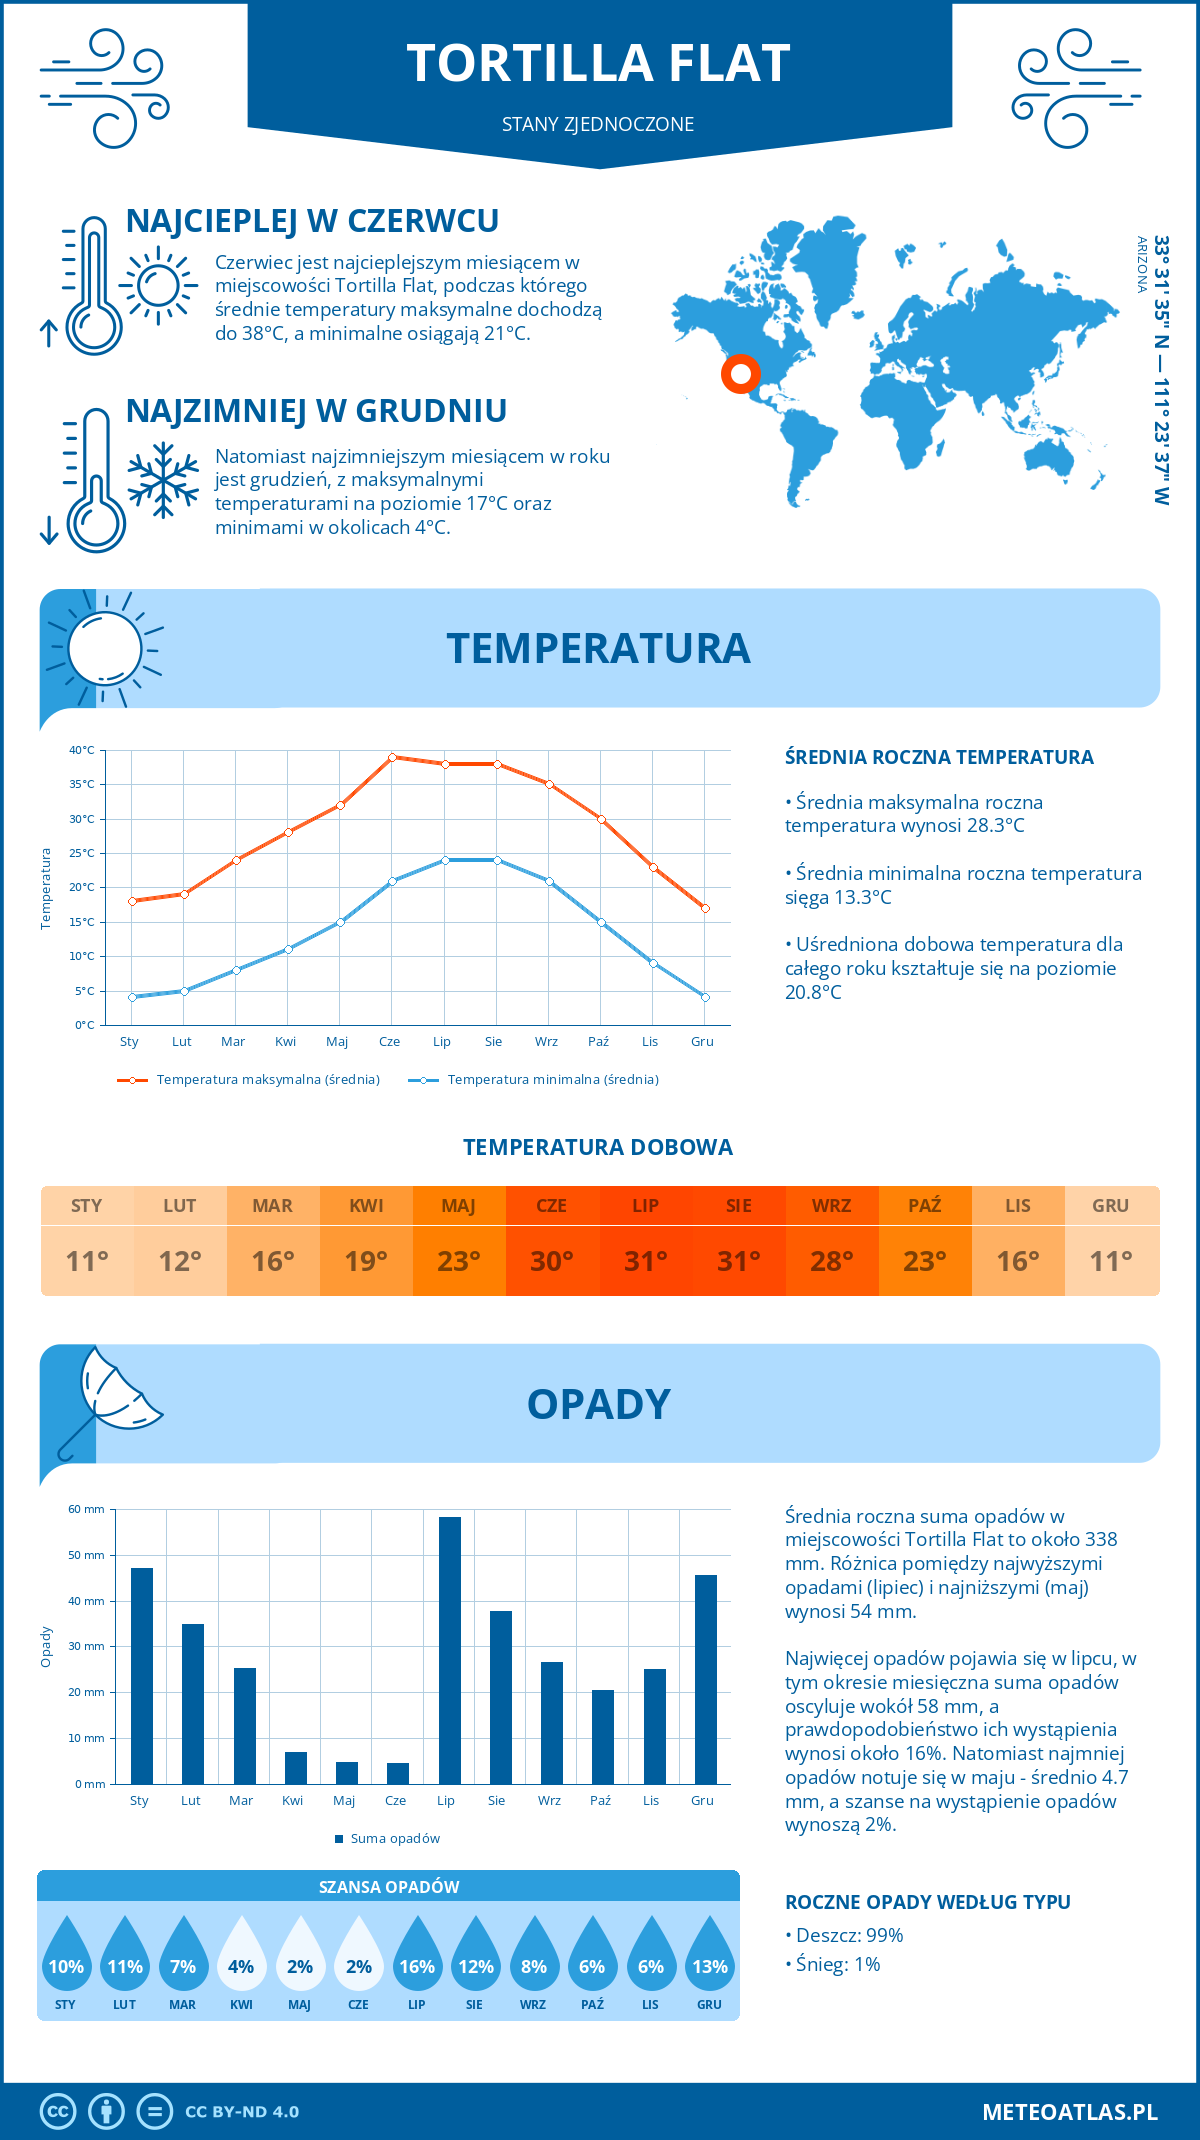 Pogoda Tortilla Flat (Stany Zjednoczone). Temperatura oraz opady.